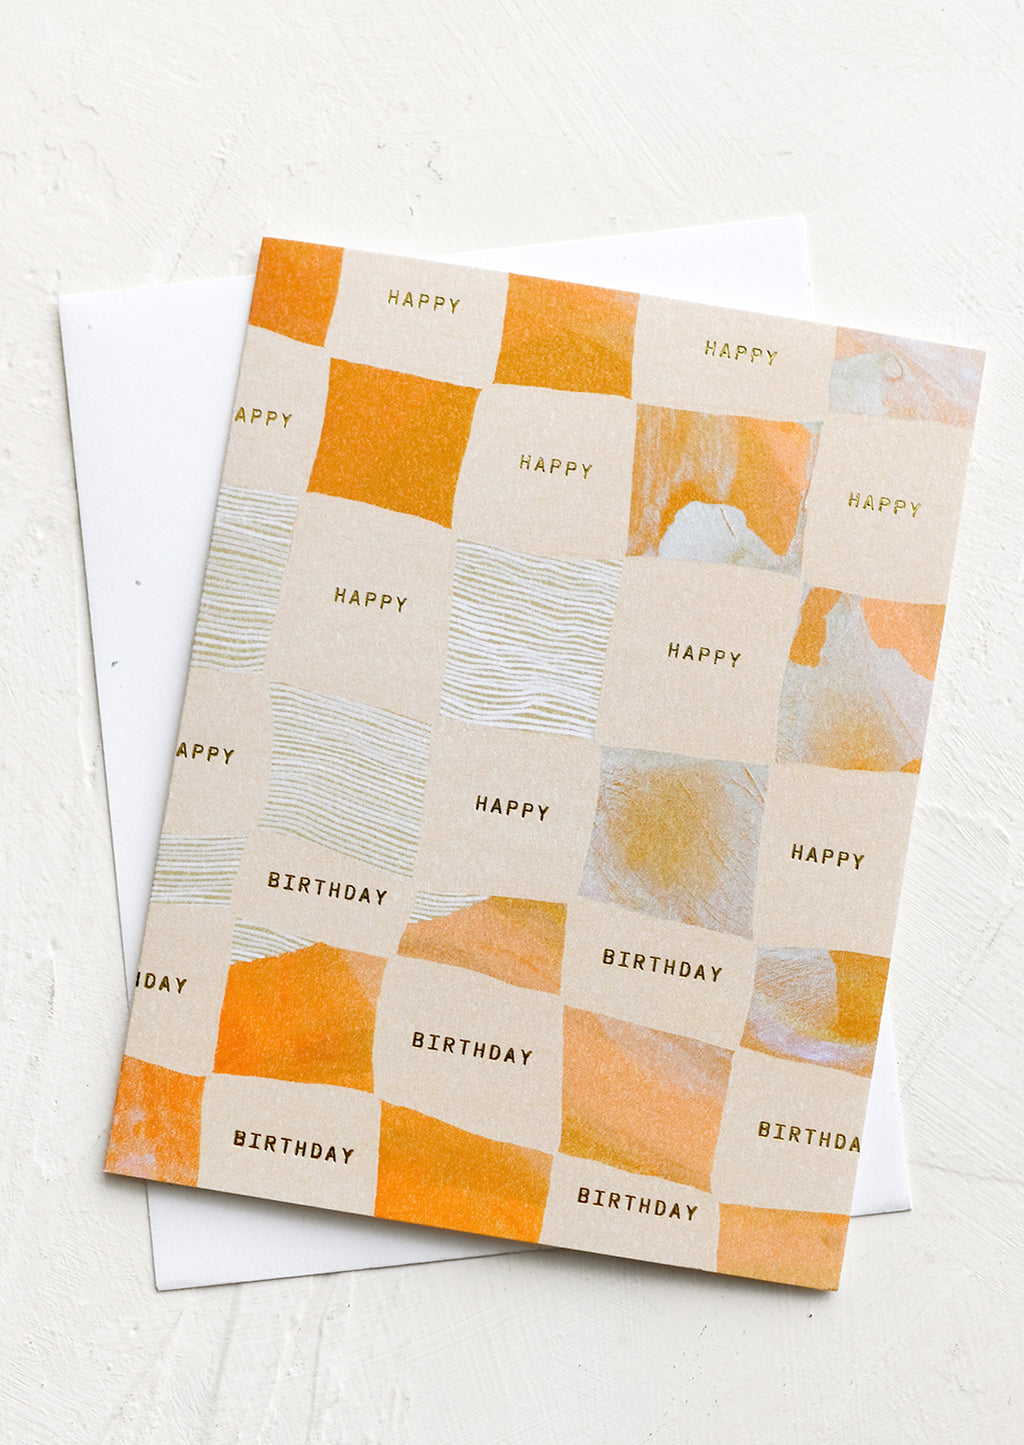 1: A birthday card with checker print.